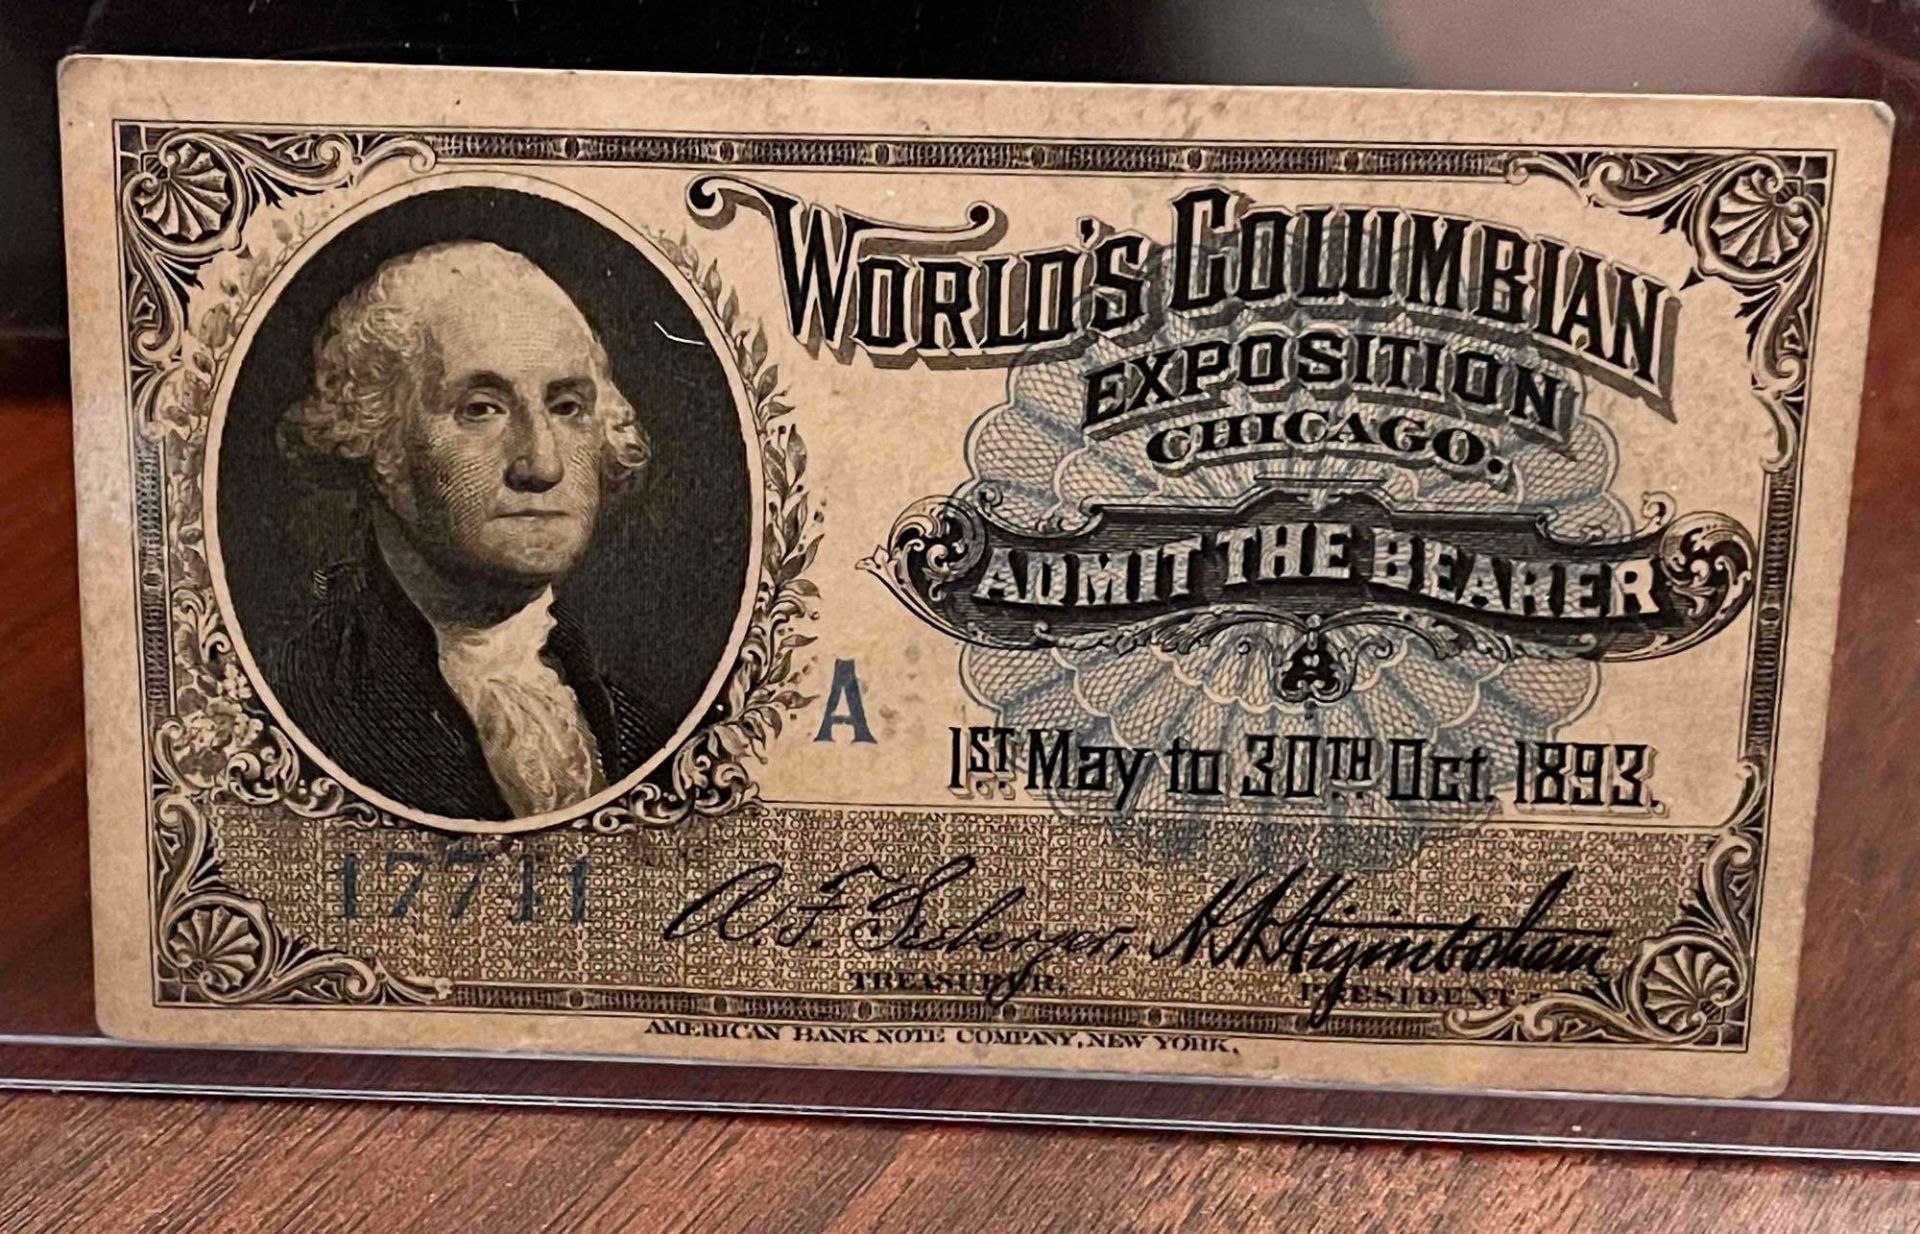 1893 Worlds Columbian Exposition Ticket